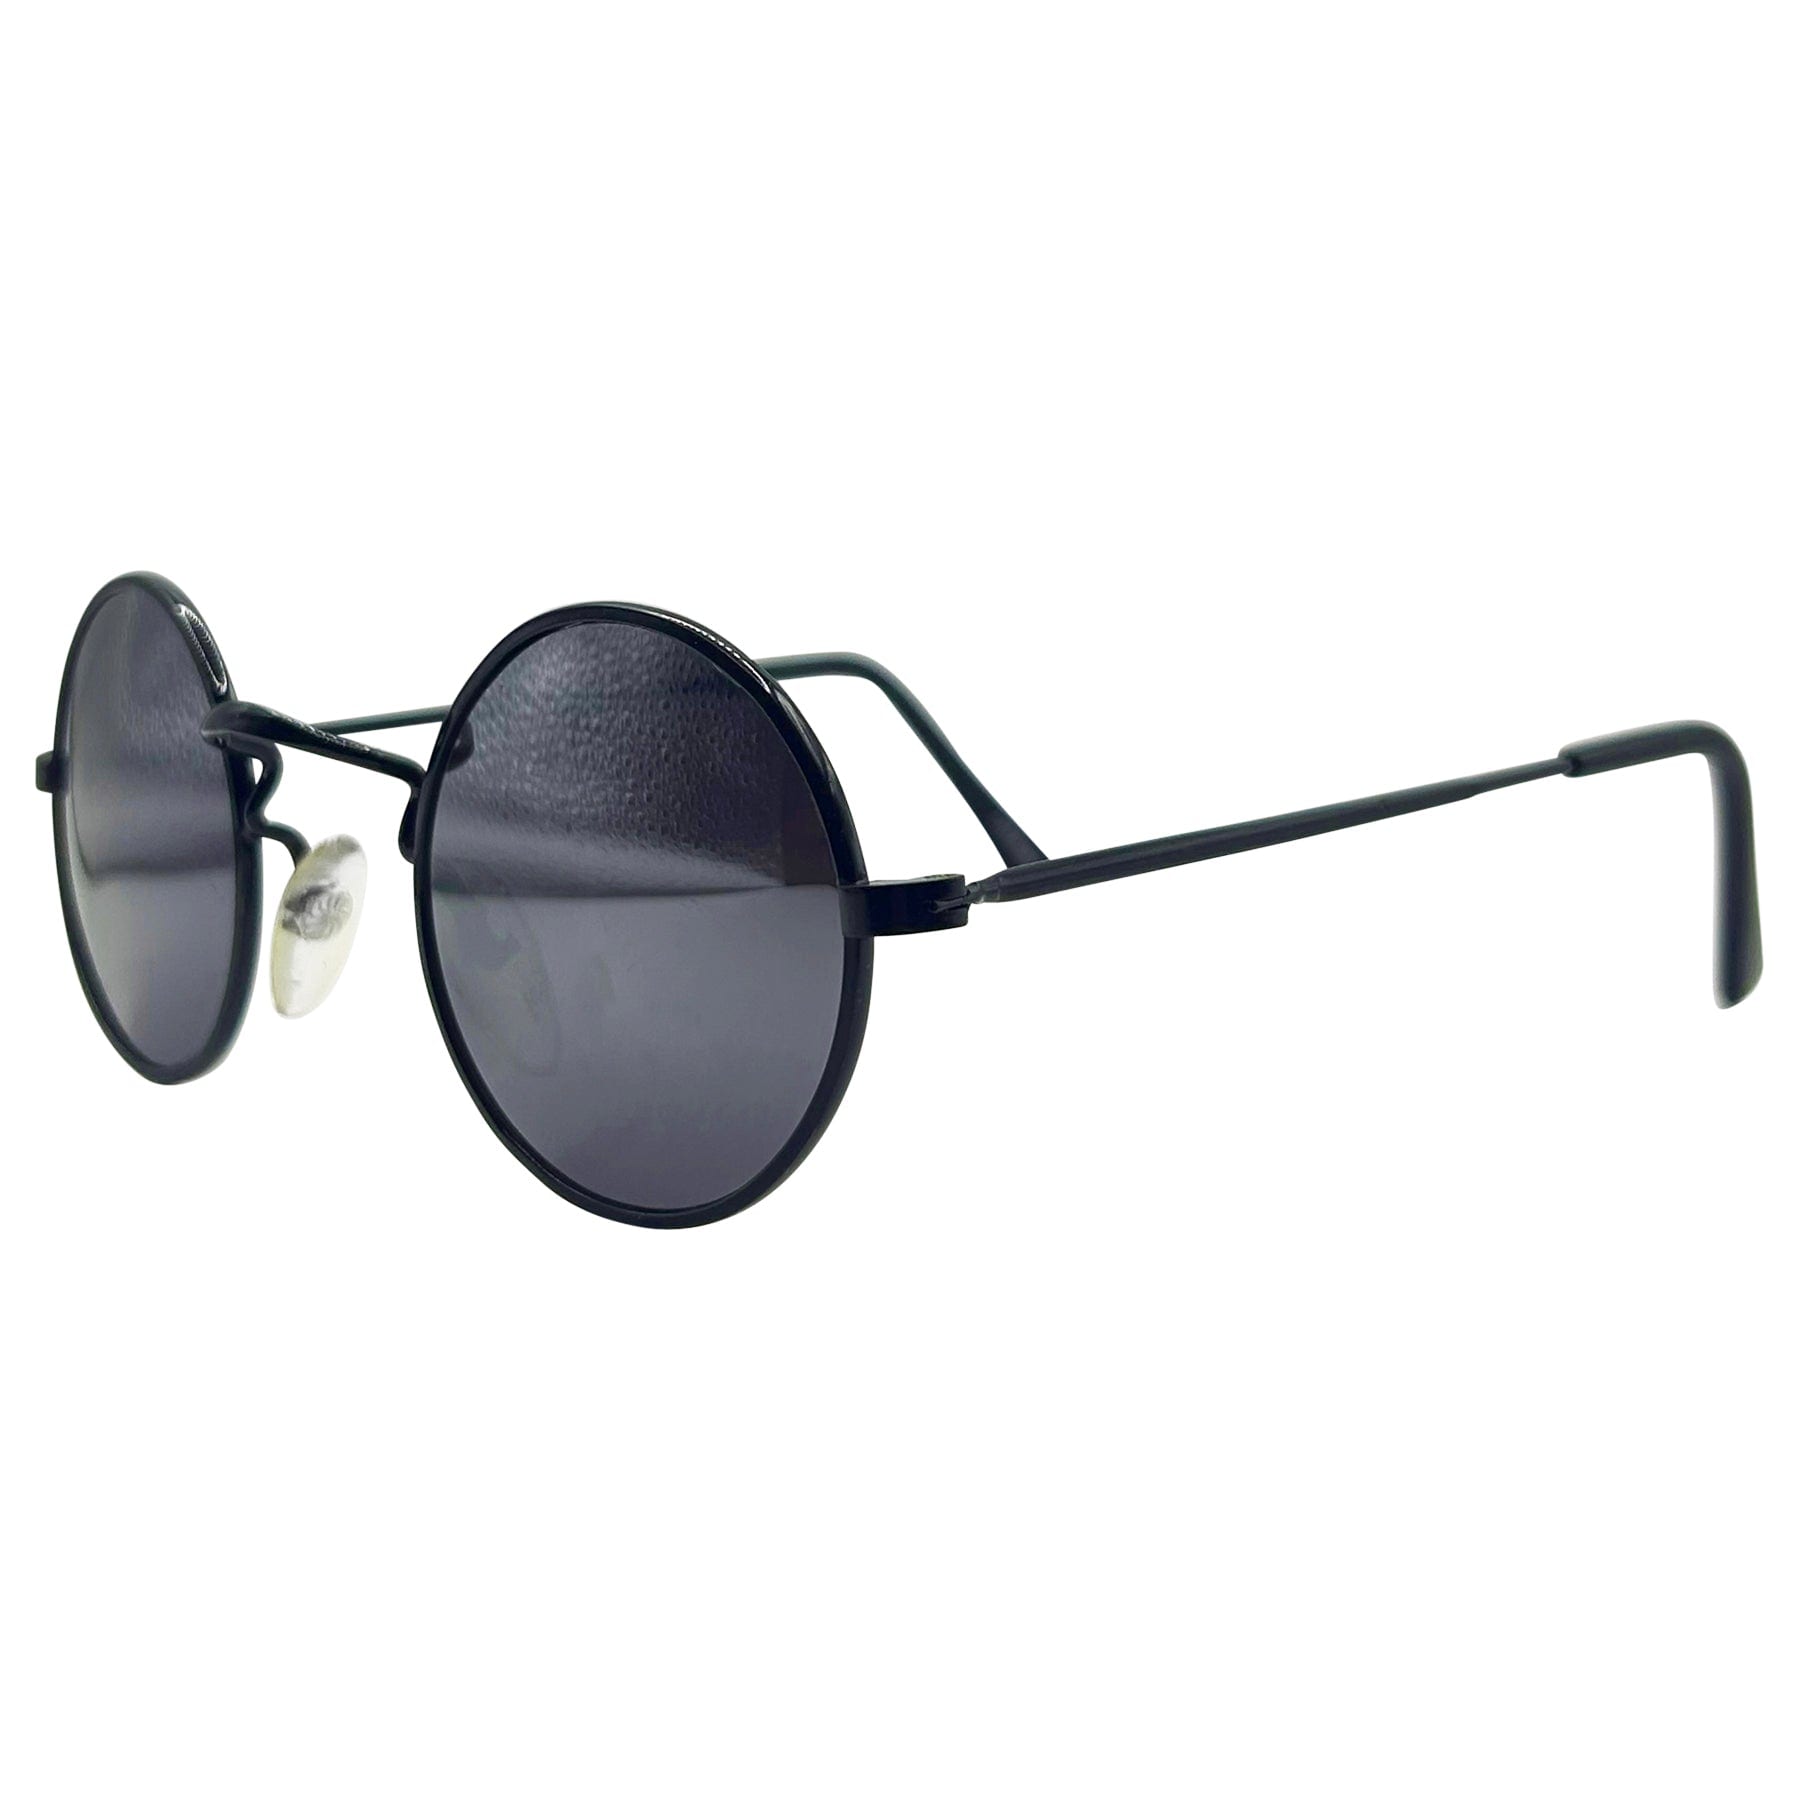 round 90s vintage sunglasses with a super dark lens